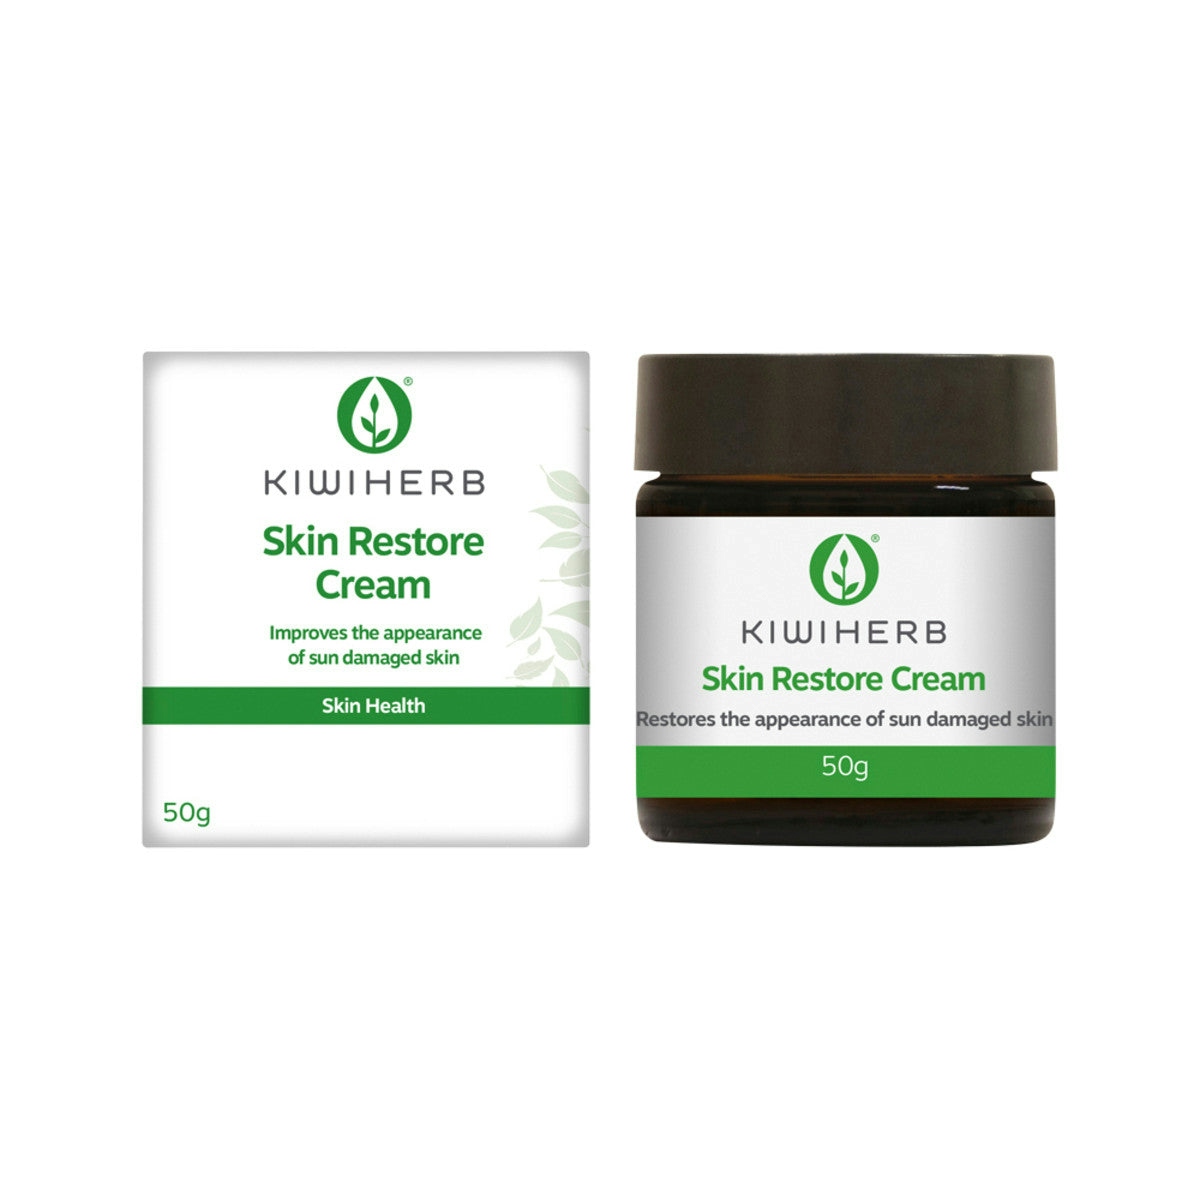 image of KiwiHerb Skin Restore Cream 50g on white background 